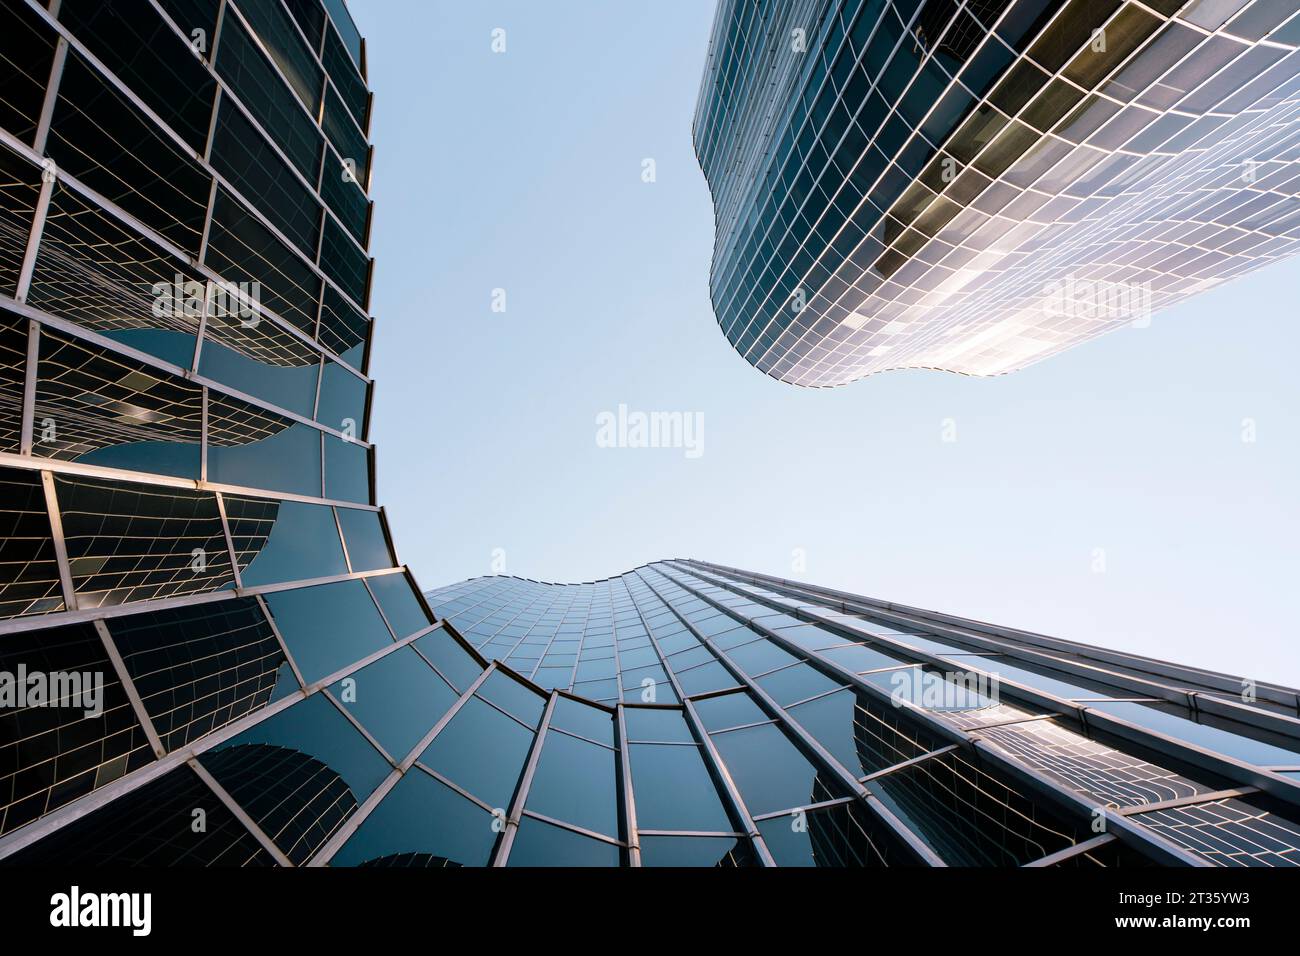 Spain, Catalonia, Barcelona, Directly below view of modern glass skyscraper Stock Photo